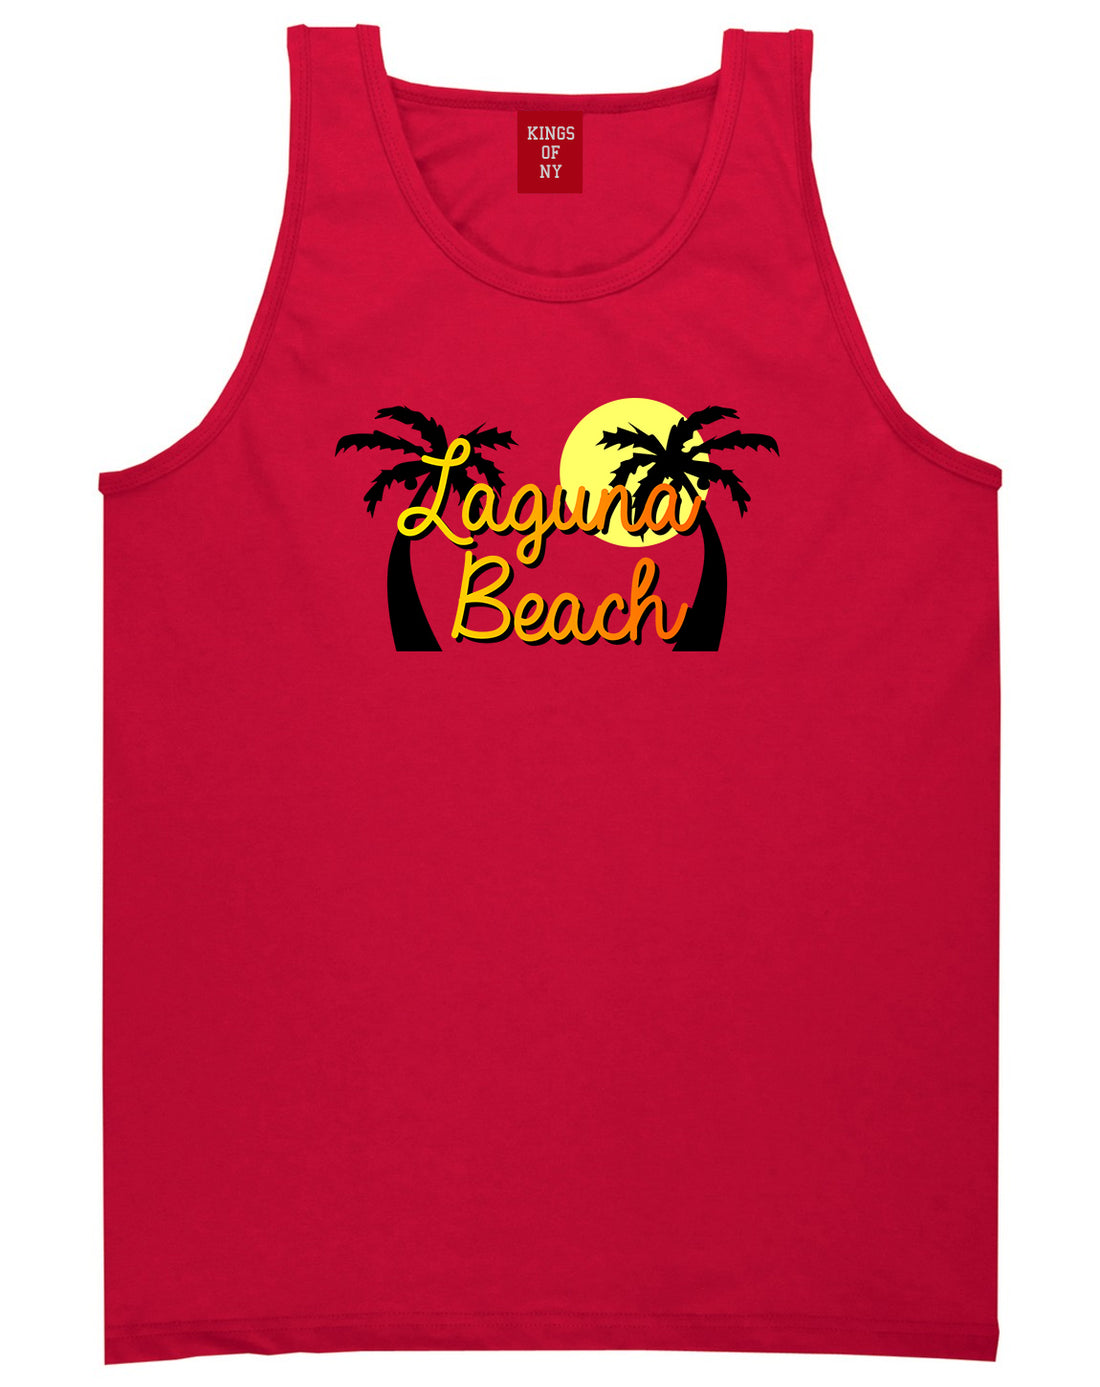 Laguna Beach California Mens Tank Top Shirt Red by Kings Of NY